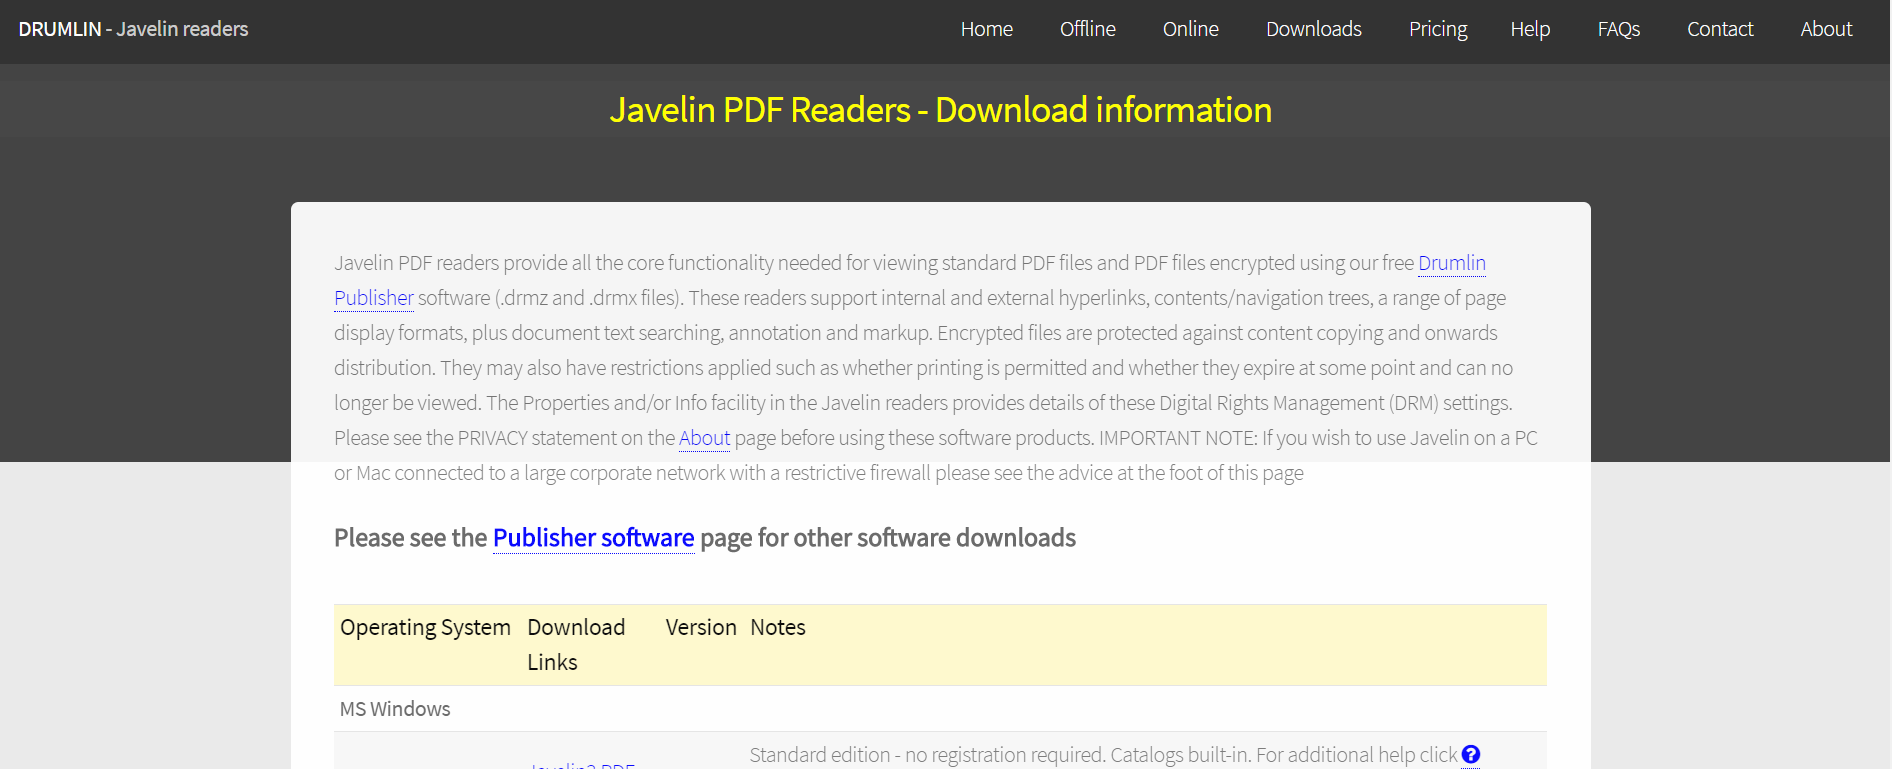 Javelin PDF reader